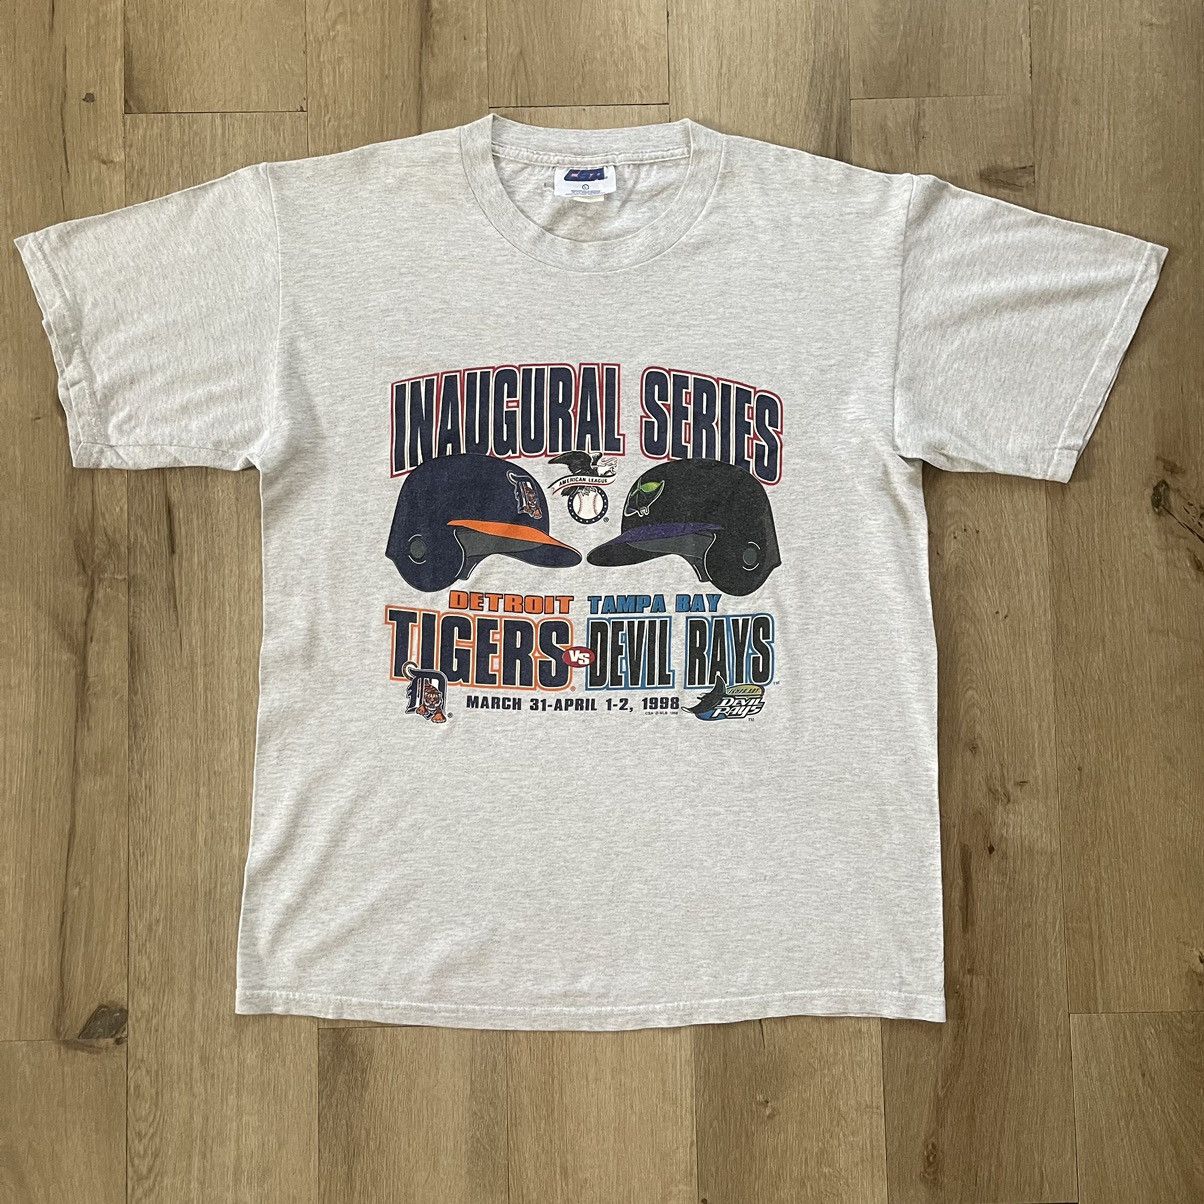 Vintage Tampa Bay Devil Rays Jersey 90s Inaugural Season 1998 